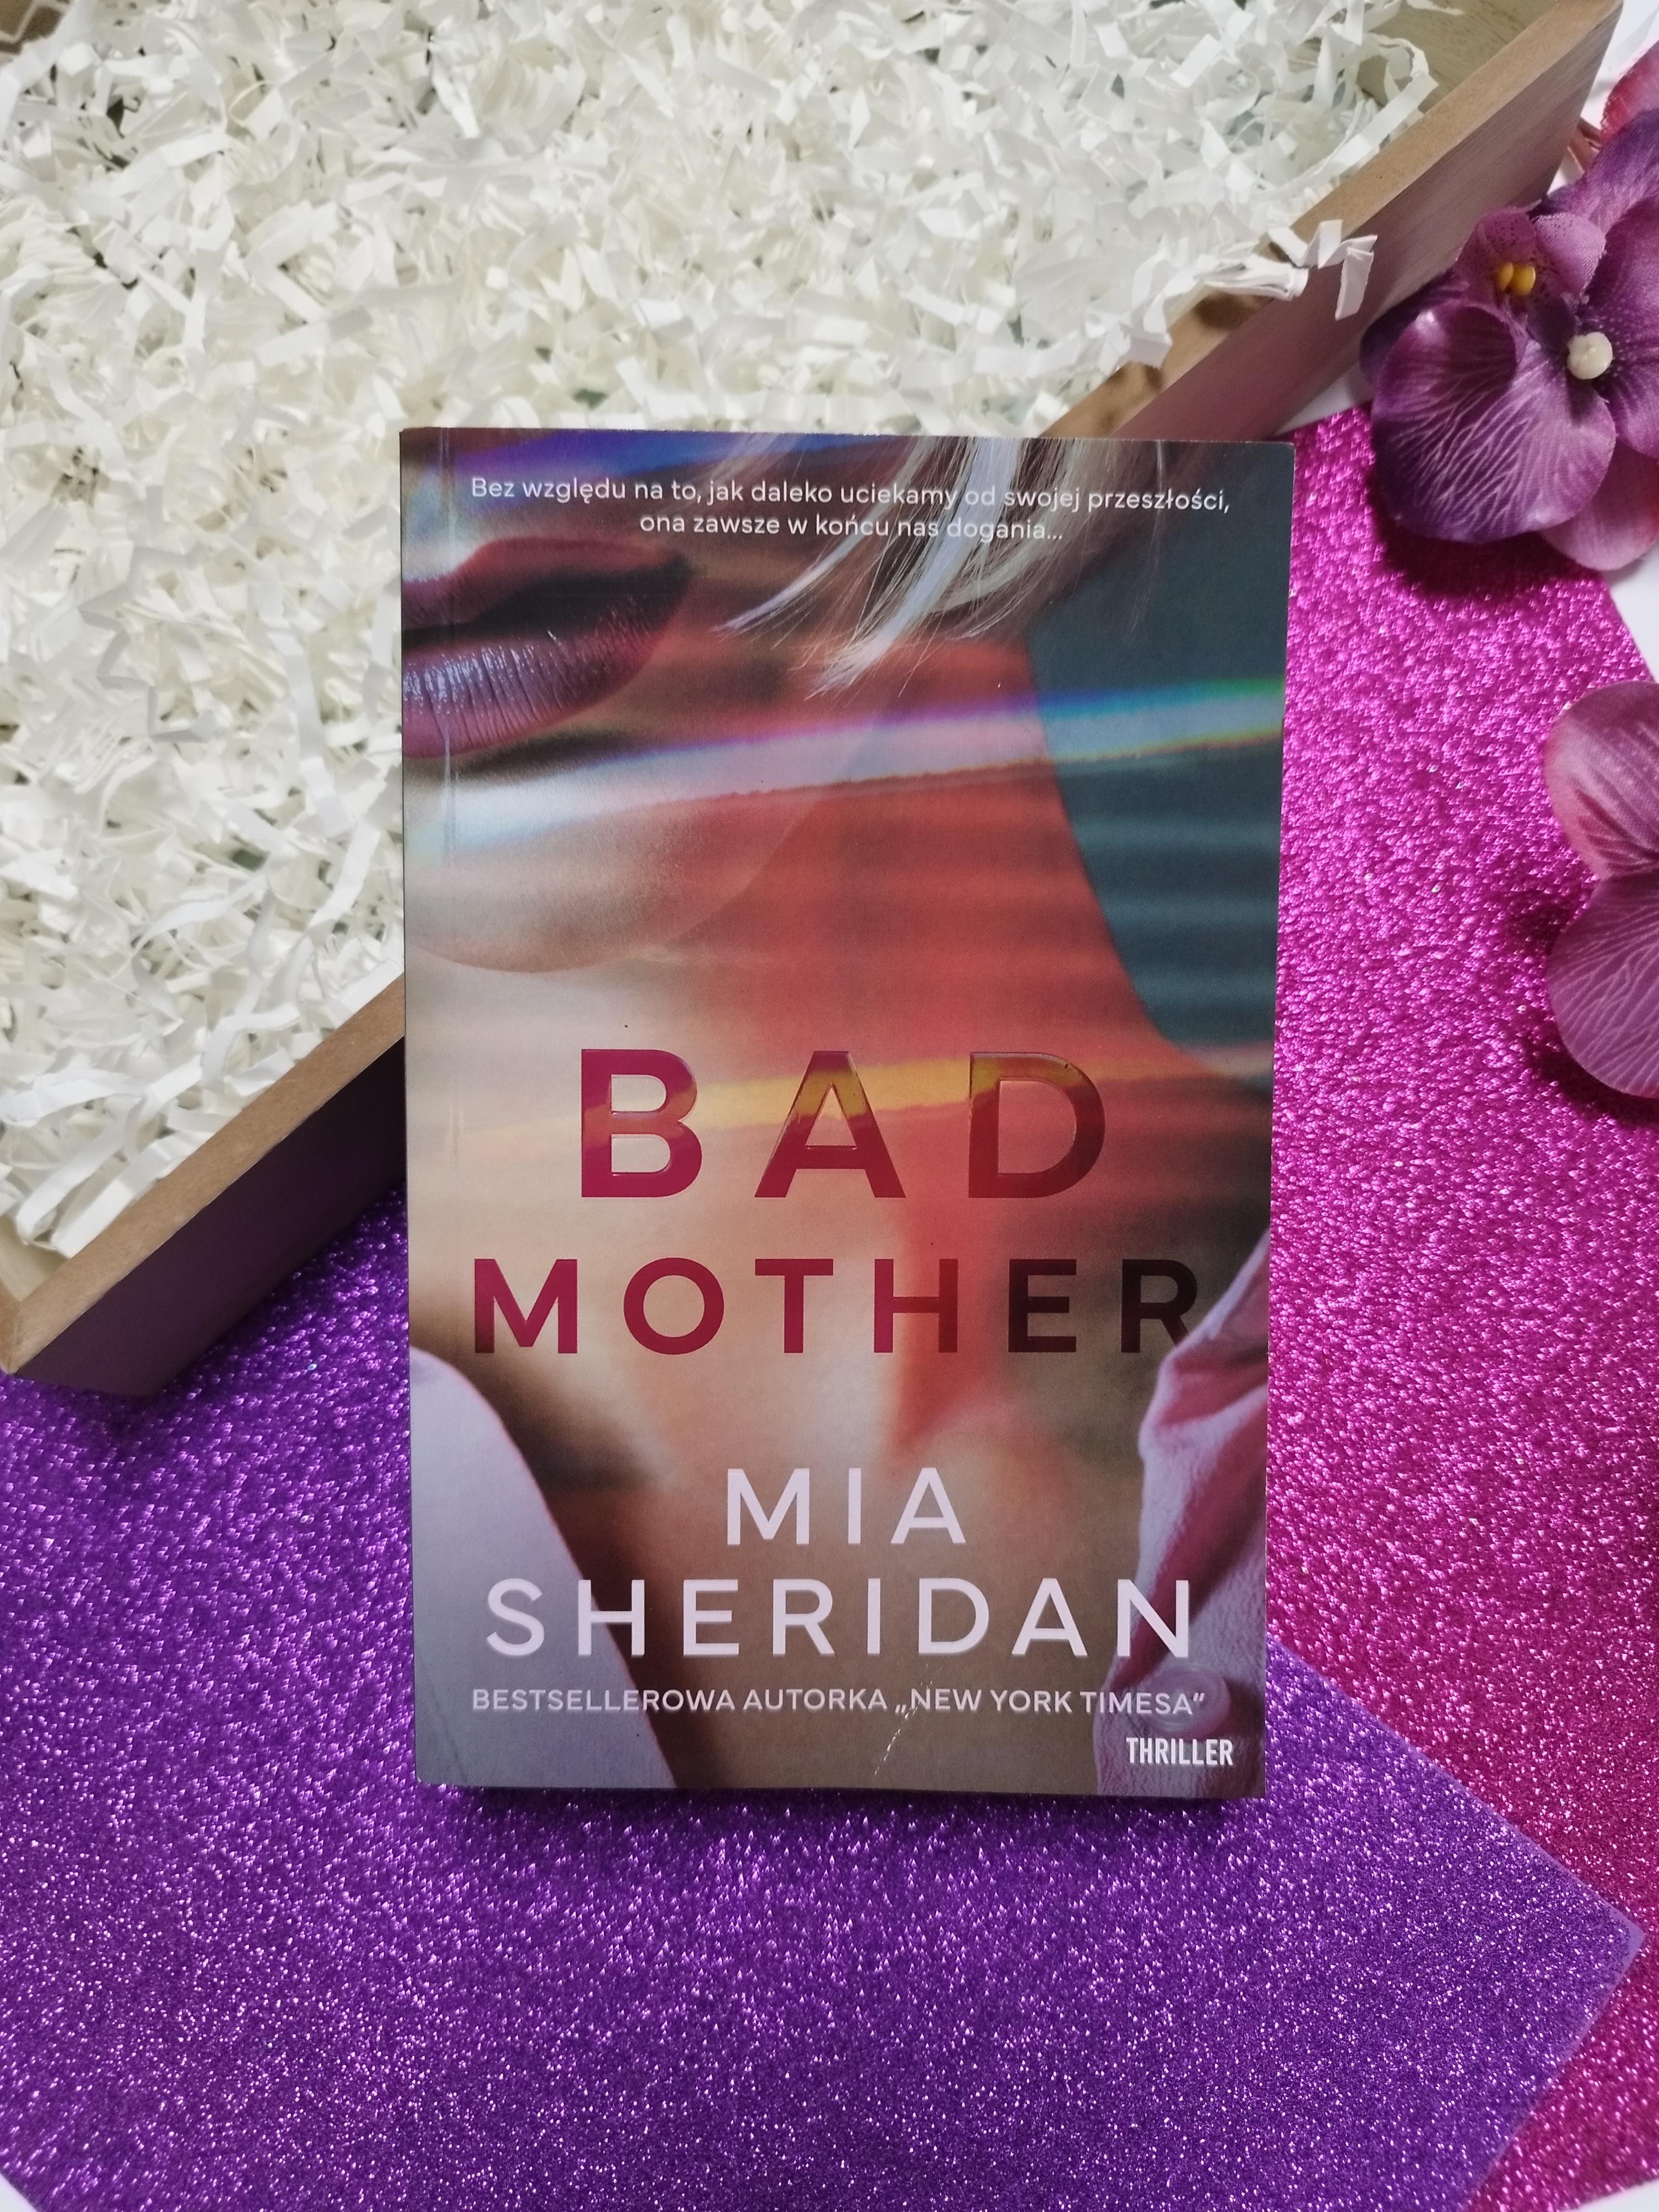 "Bad mother" Mia Sheridan